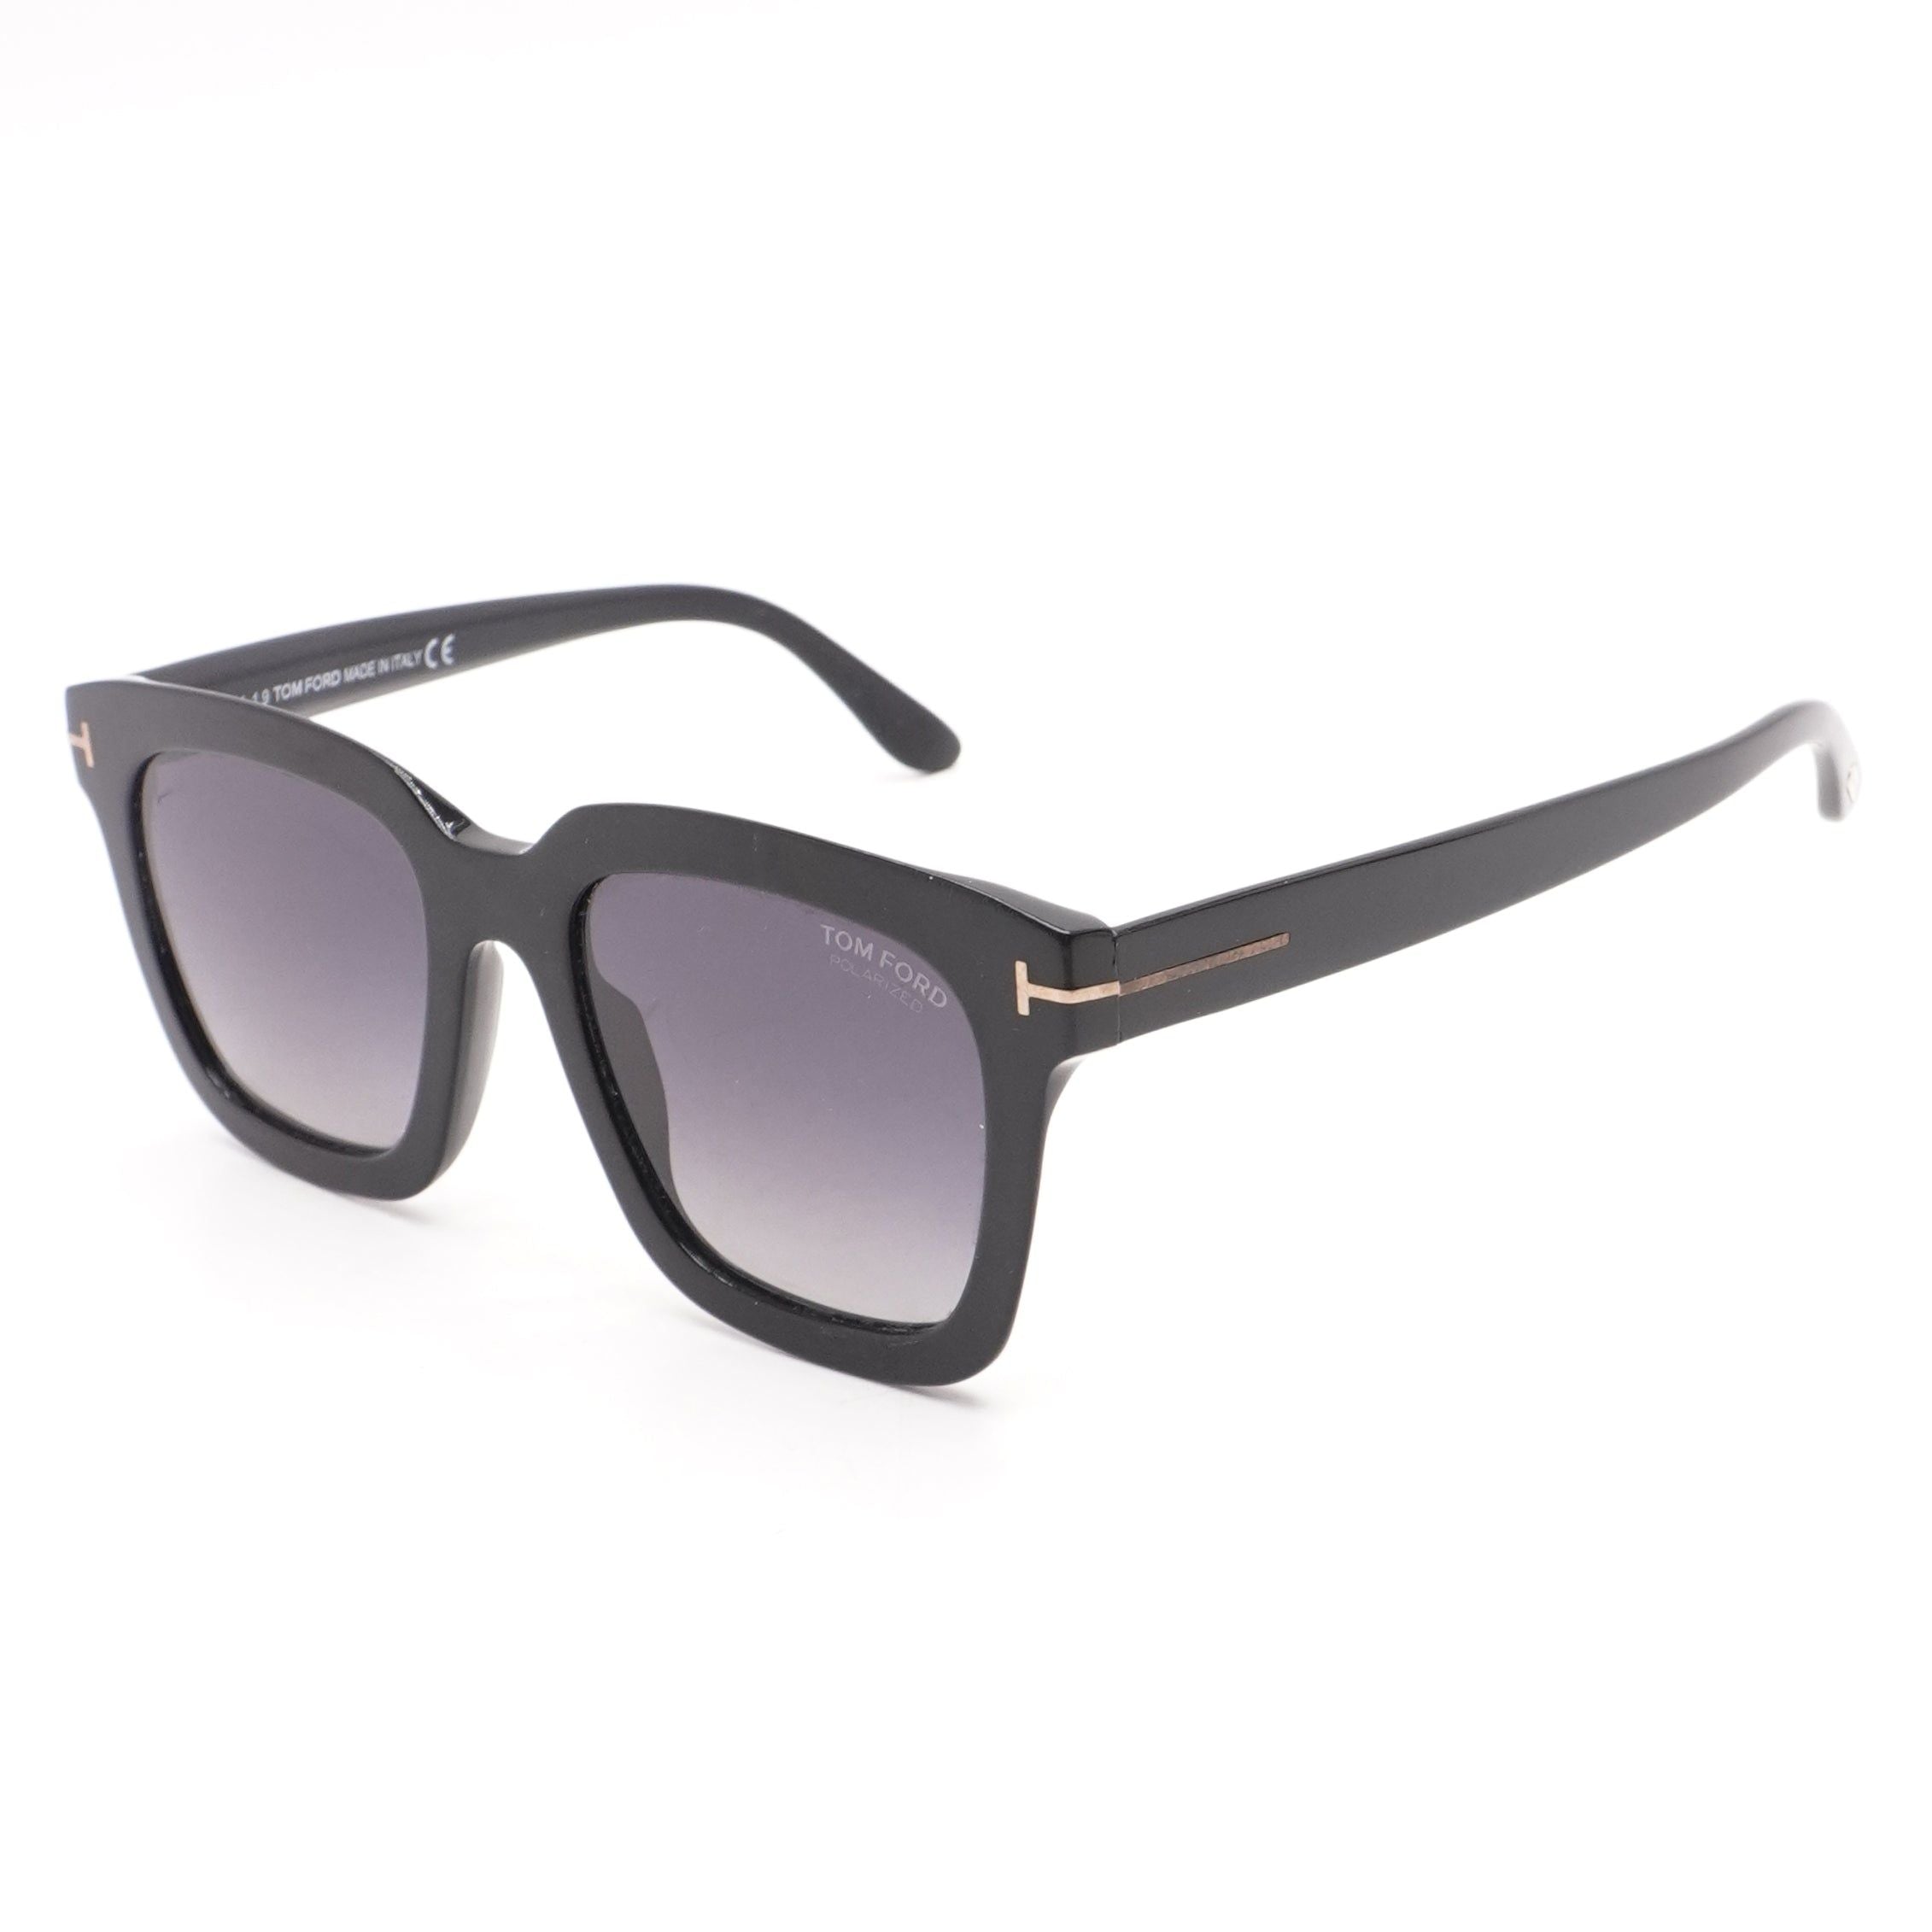 All Black Narrow Rectangular Thin Plastic Mens Minimal Mod Sunglasses